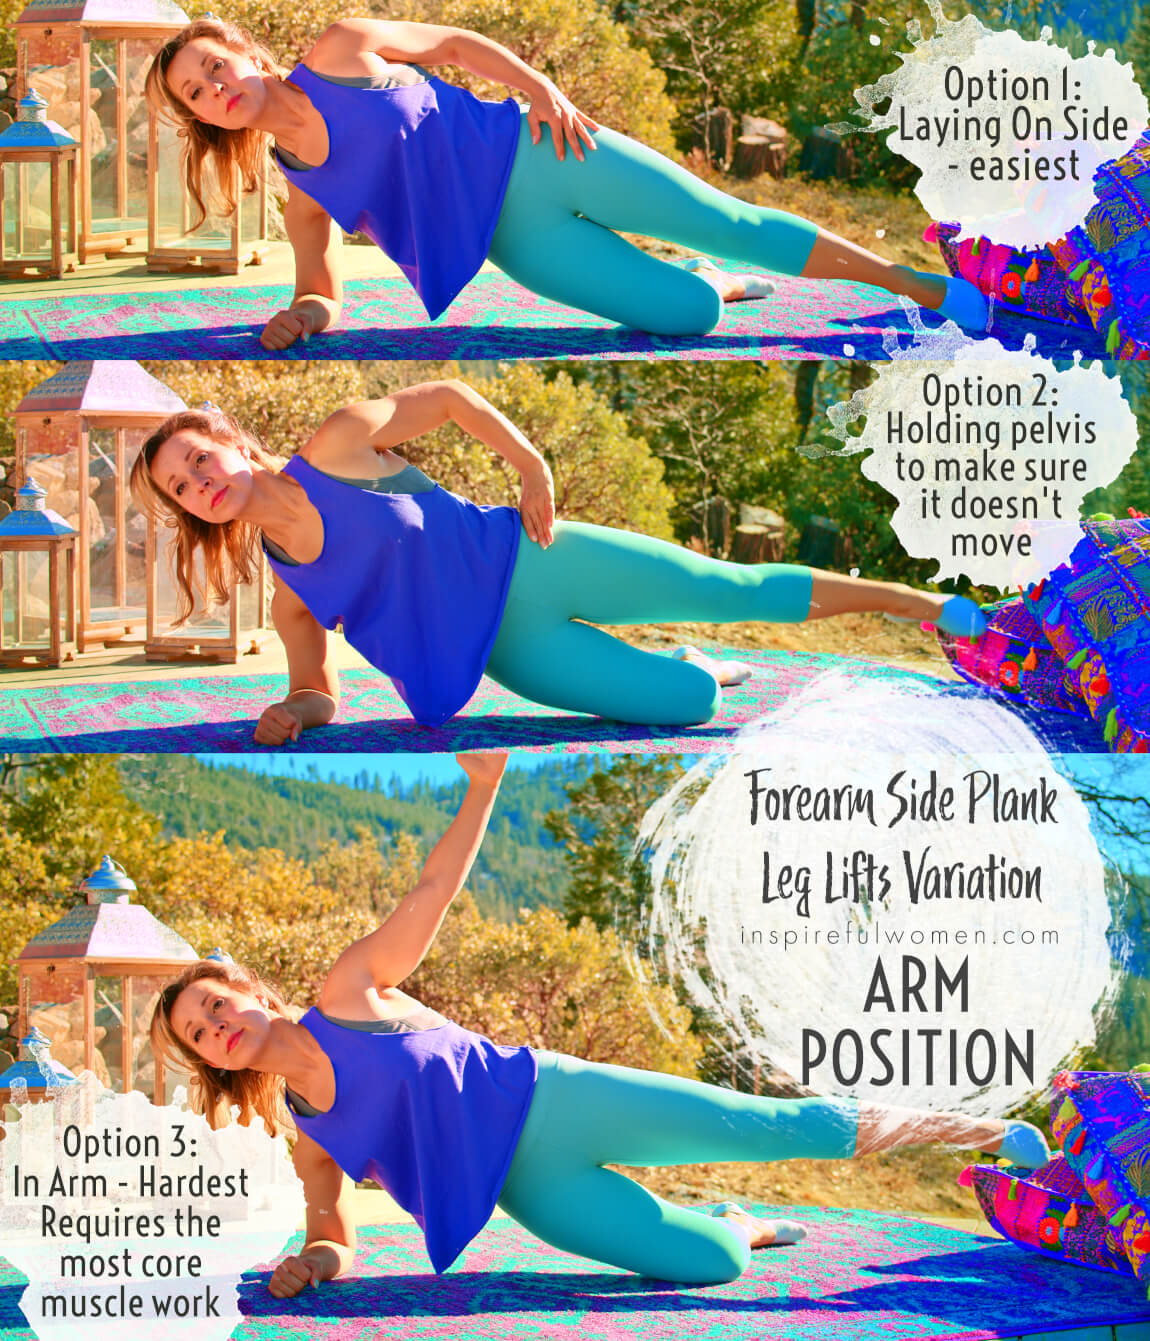 arm-position-options-forearm-side-plank-leg-raise-glute-exercise-variation